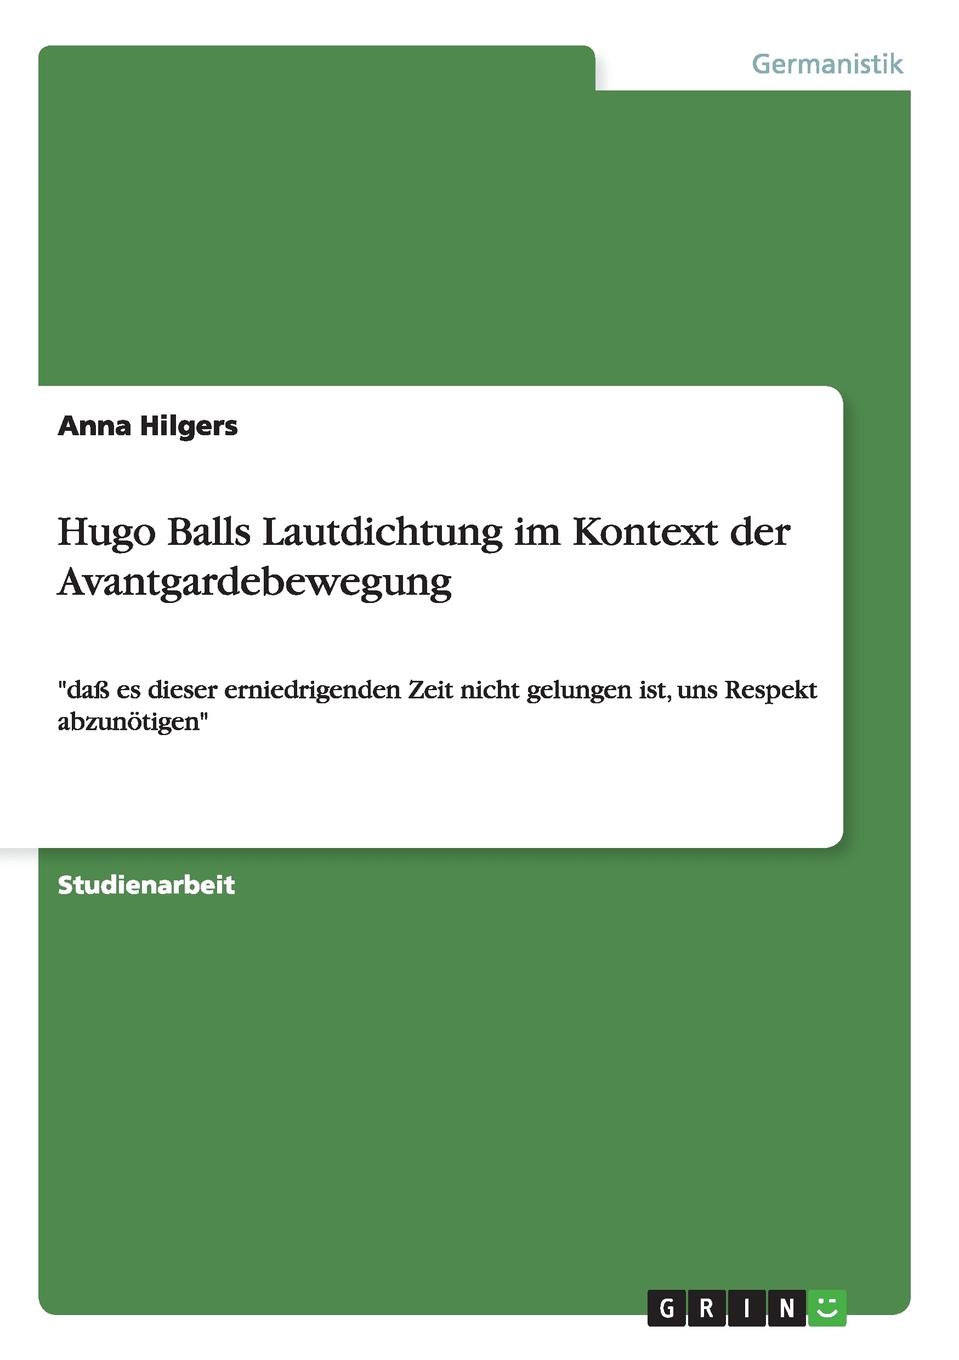 Hugo Balls Lautdichtung im Kontext der Avantgardebewegung